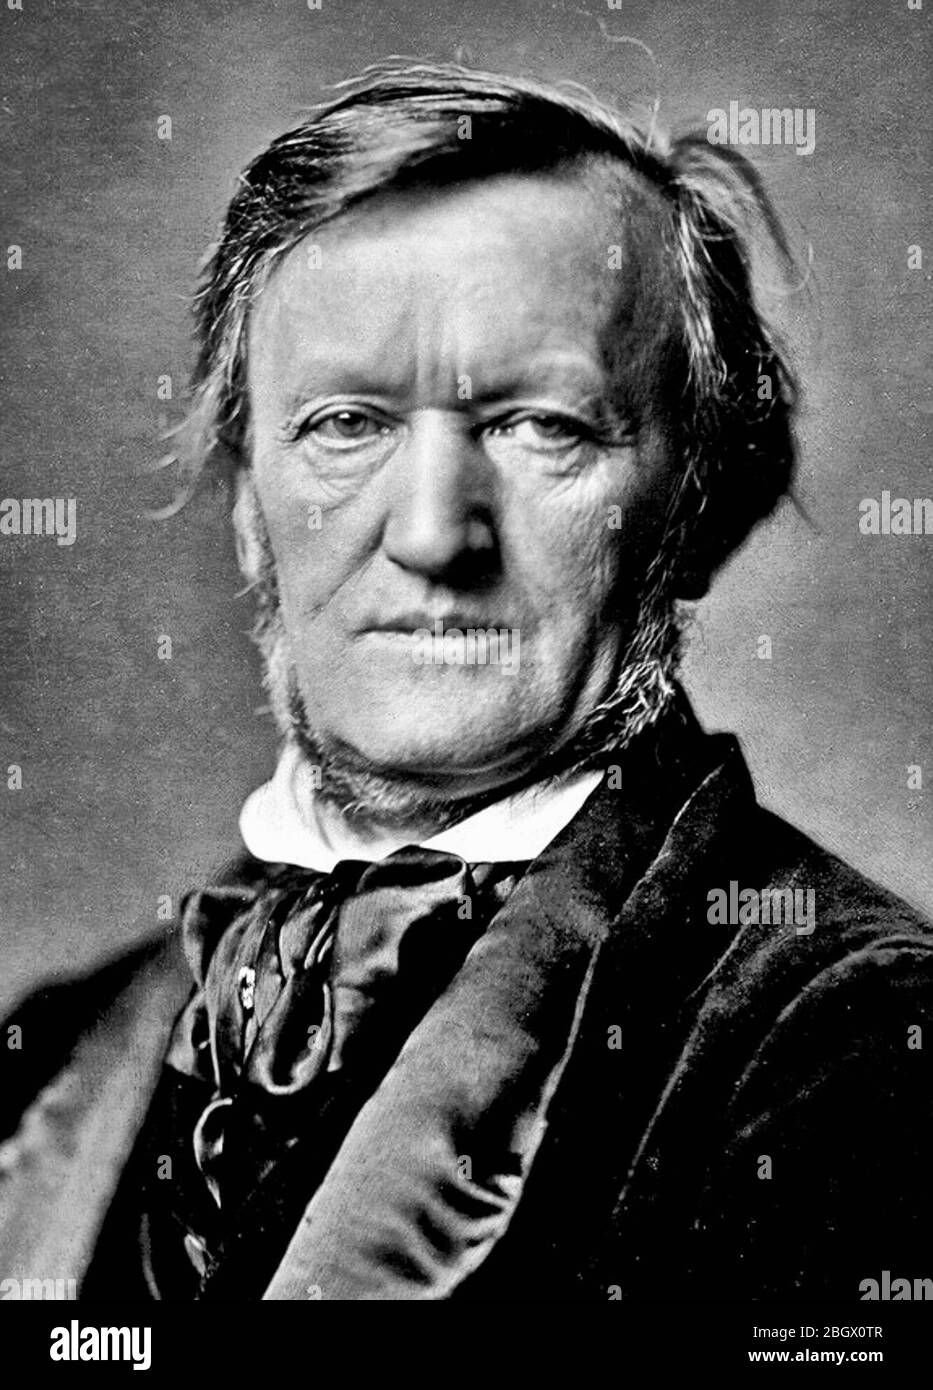 Richard Wagner, Munich, 1871 Foto de stock